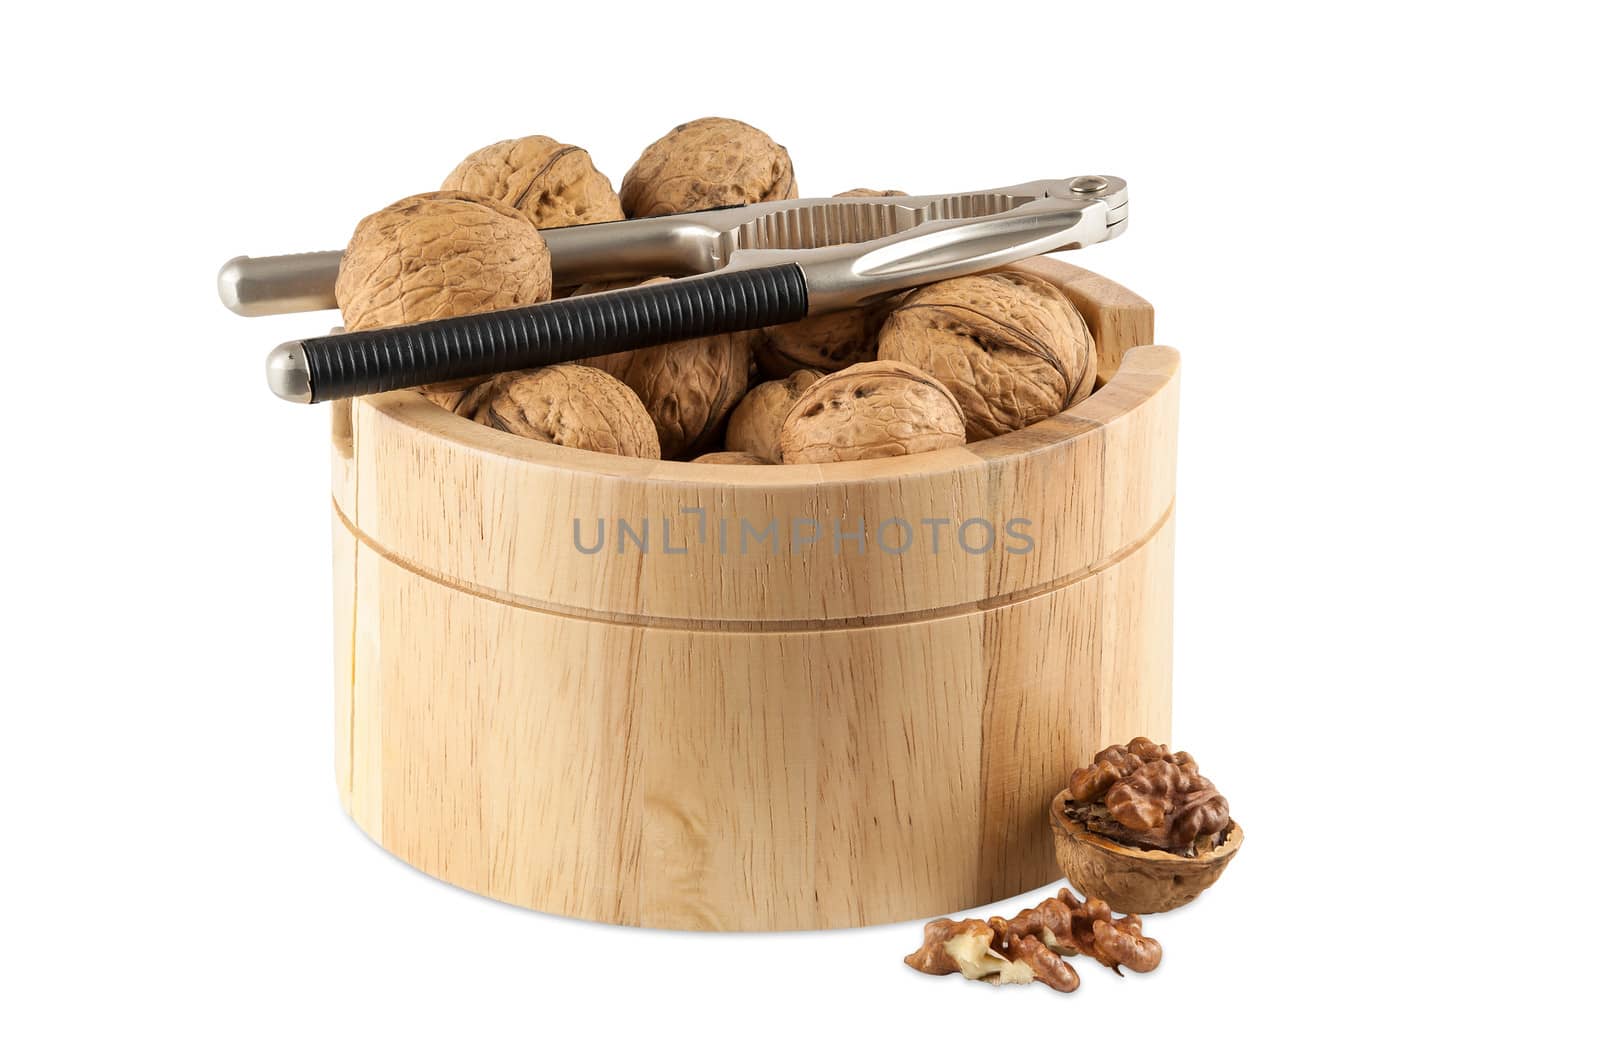 Walnuts in utensil with nutcracker by mkos83